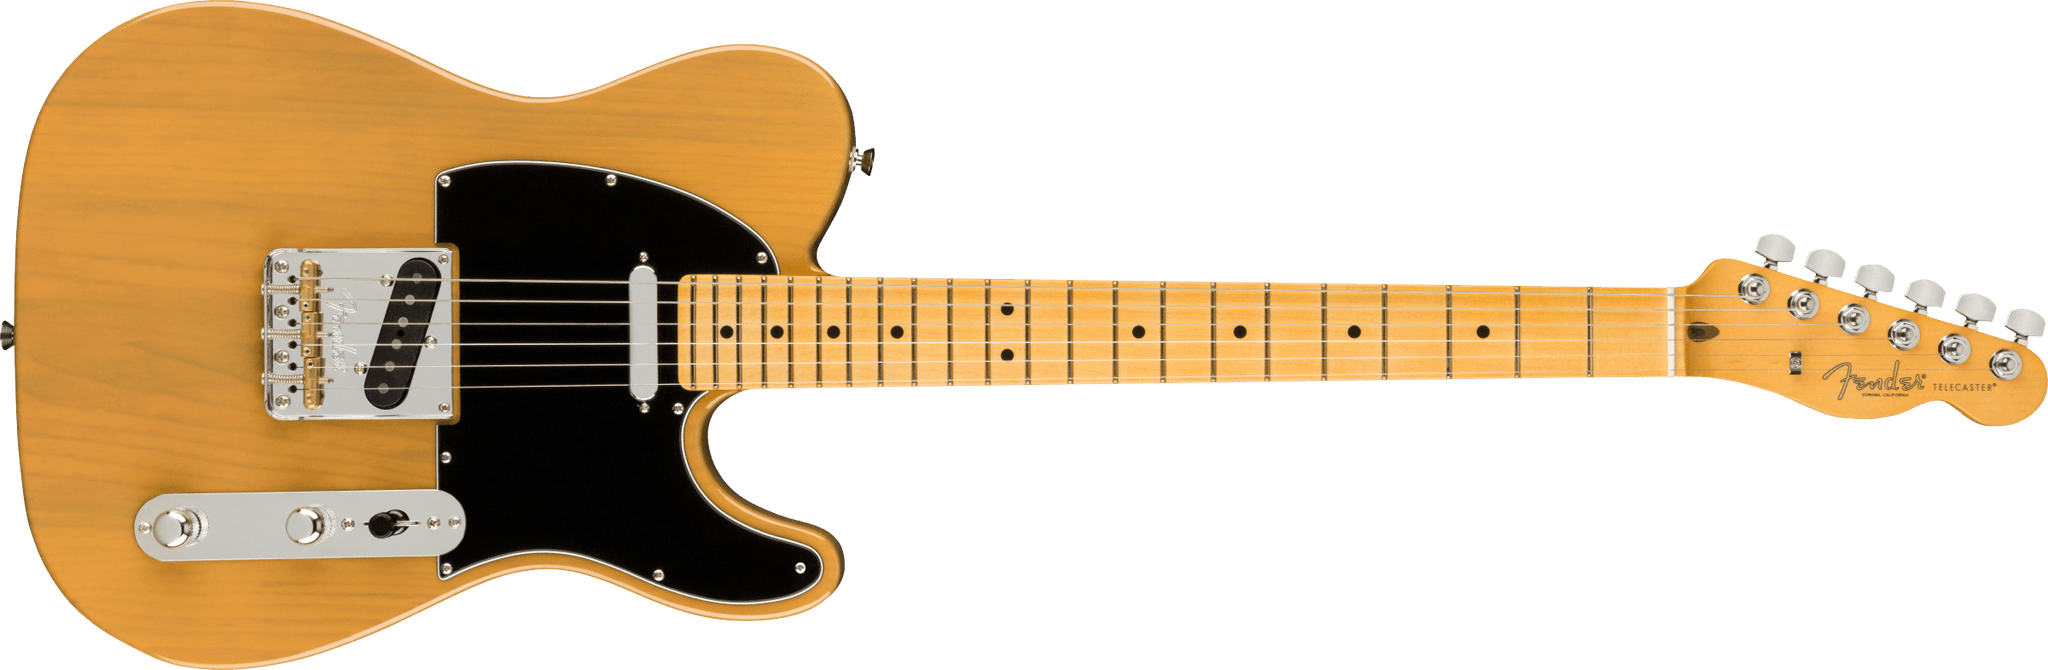 A Fender guitar